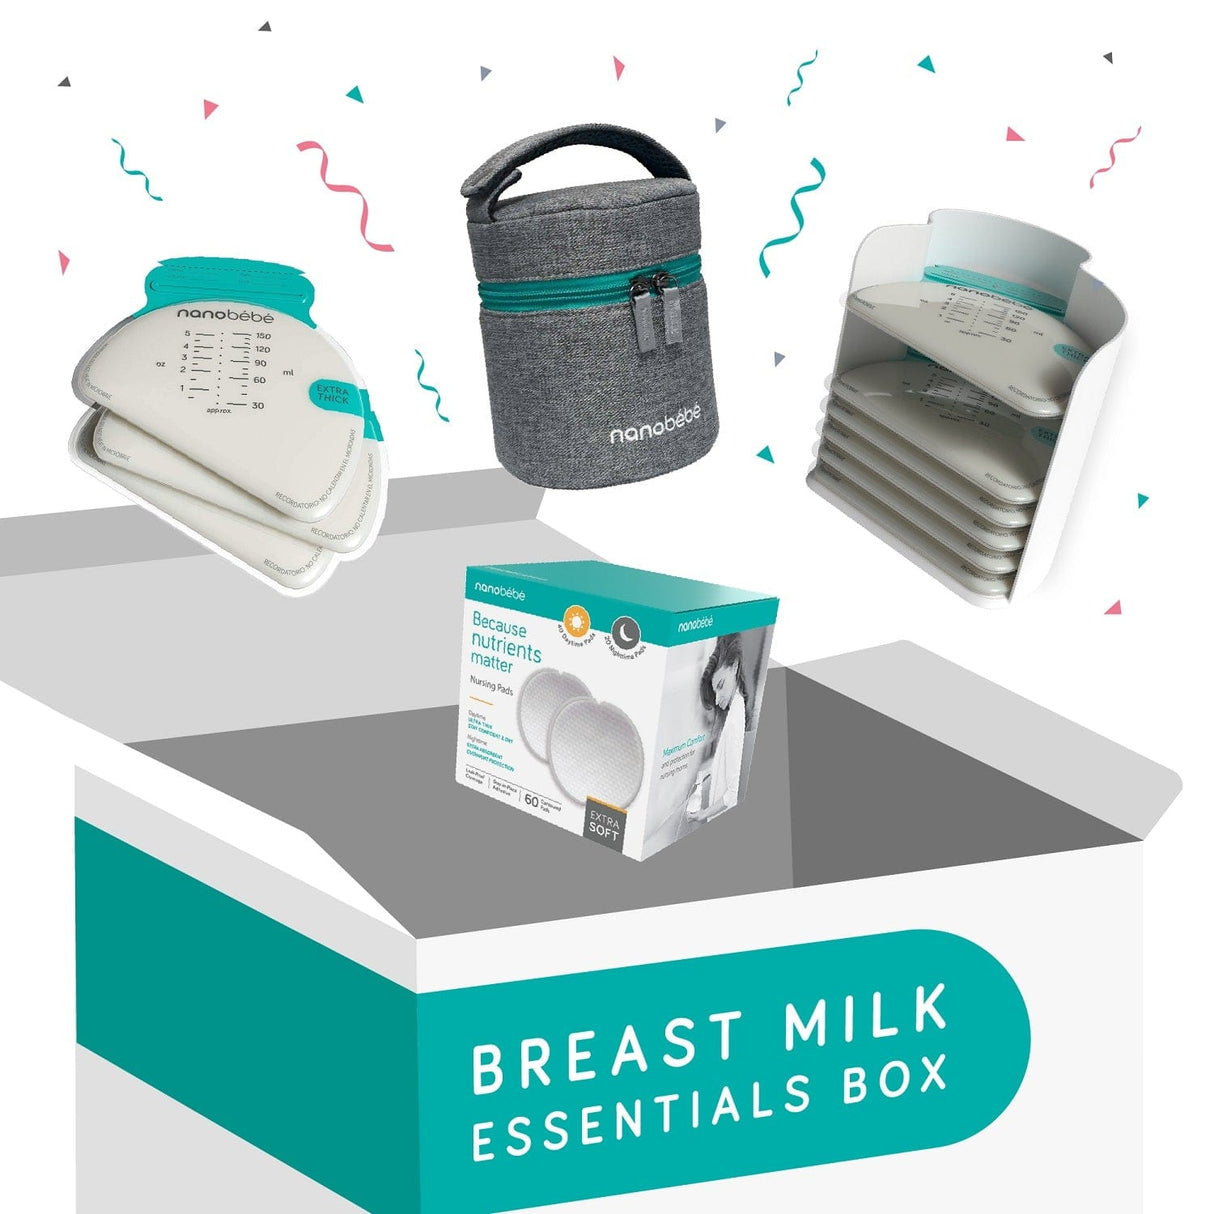 Breast Milk Essentials Box by Nanobébé US